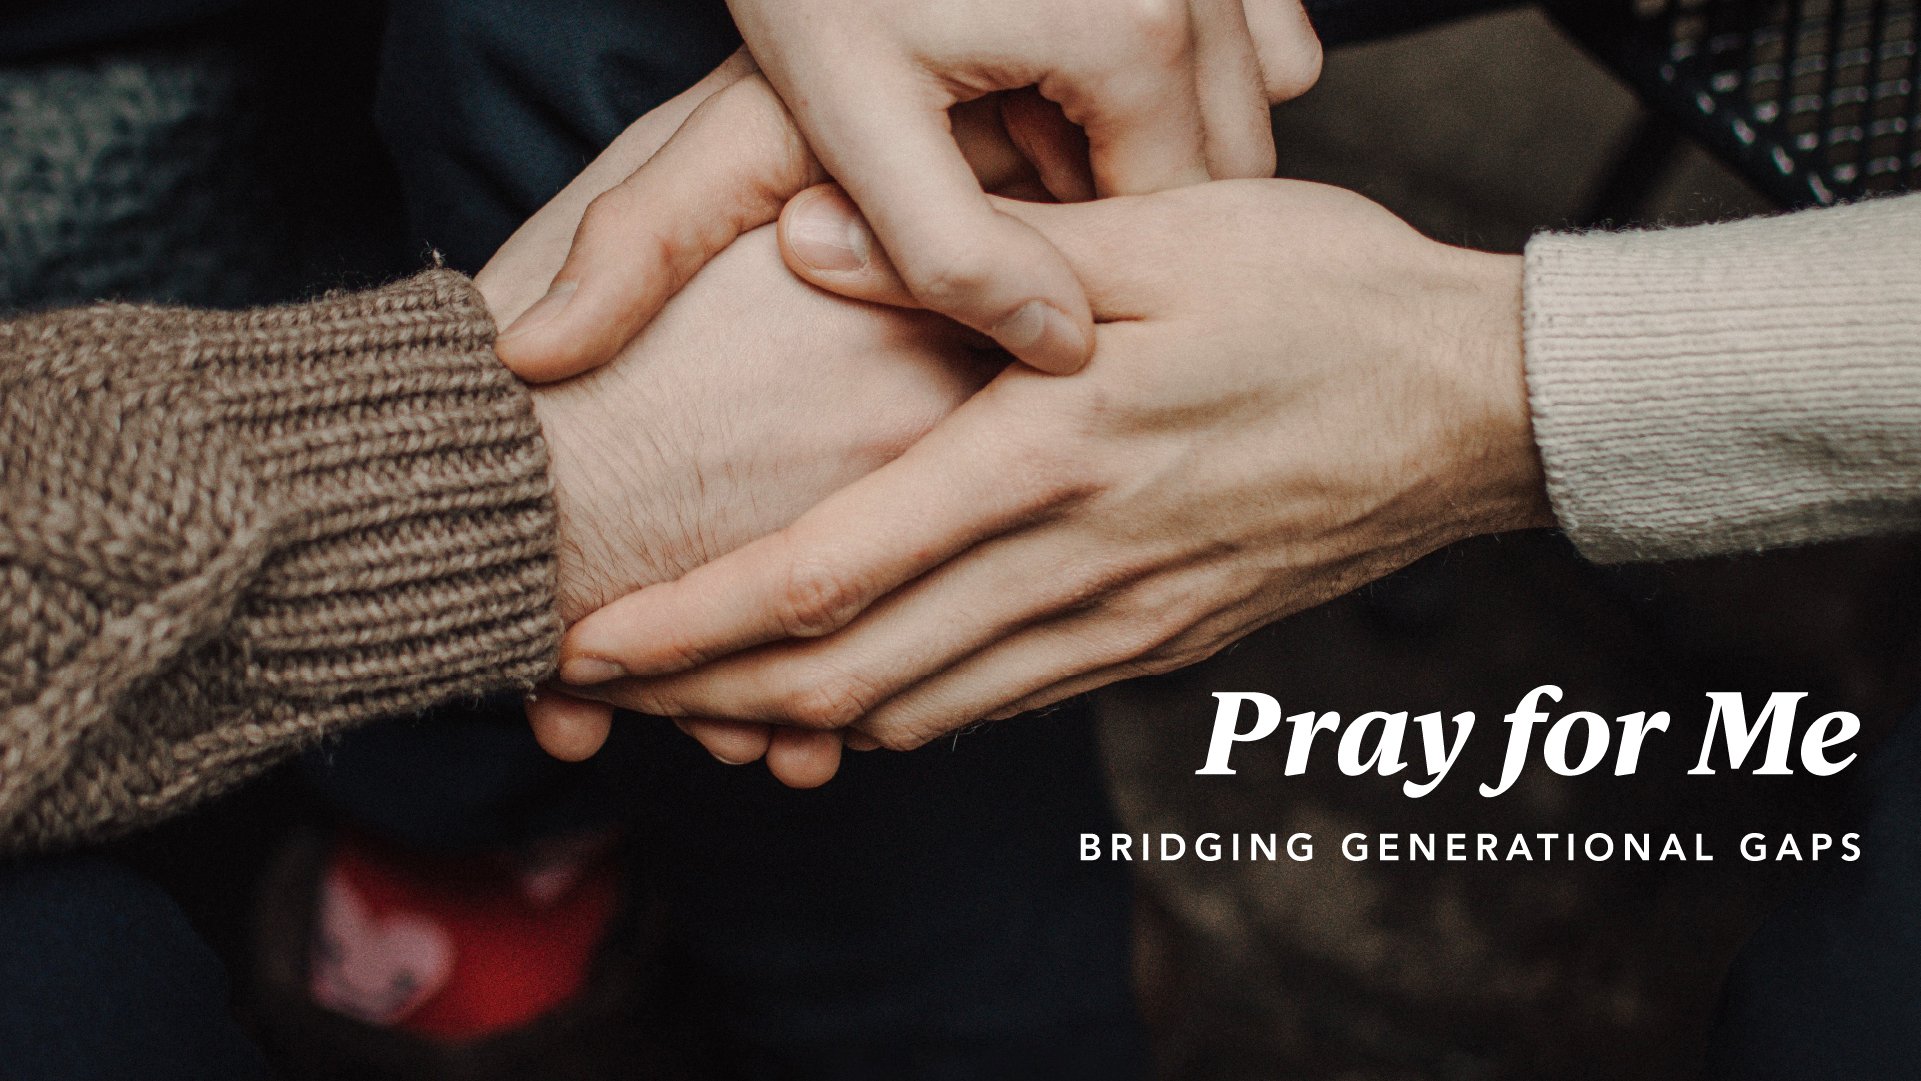 Bringing the Generations Together Through Prayer